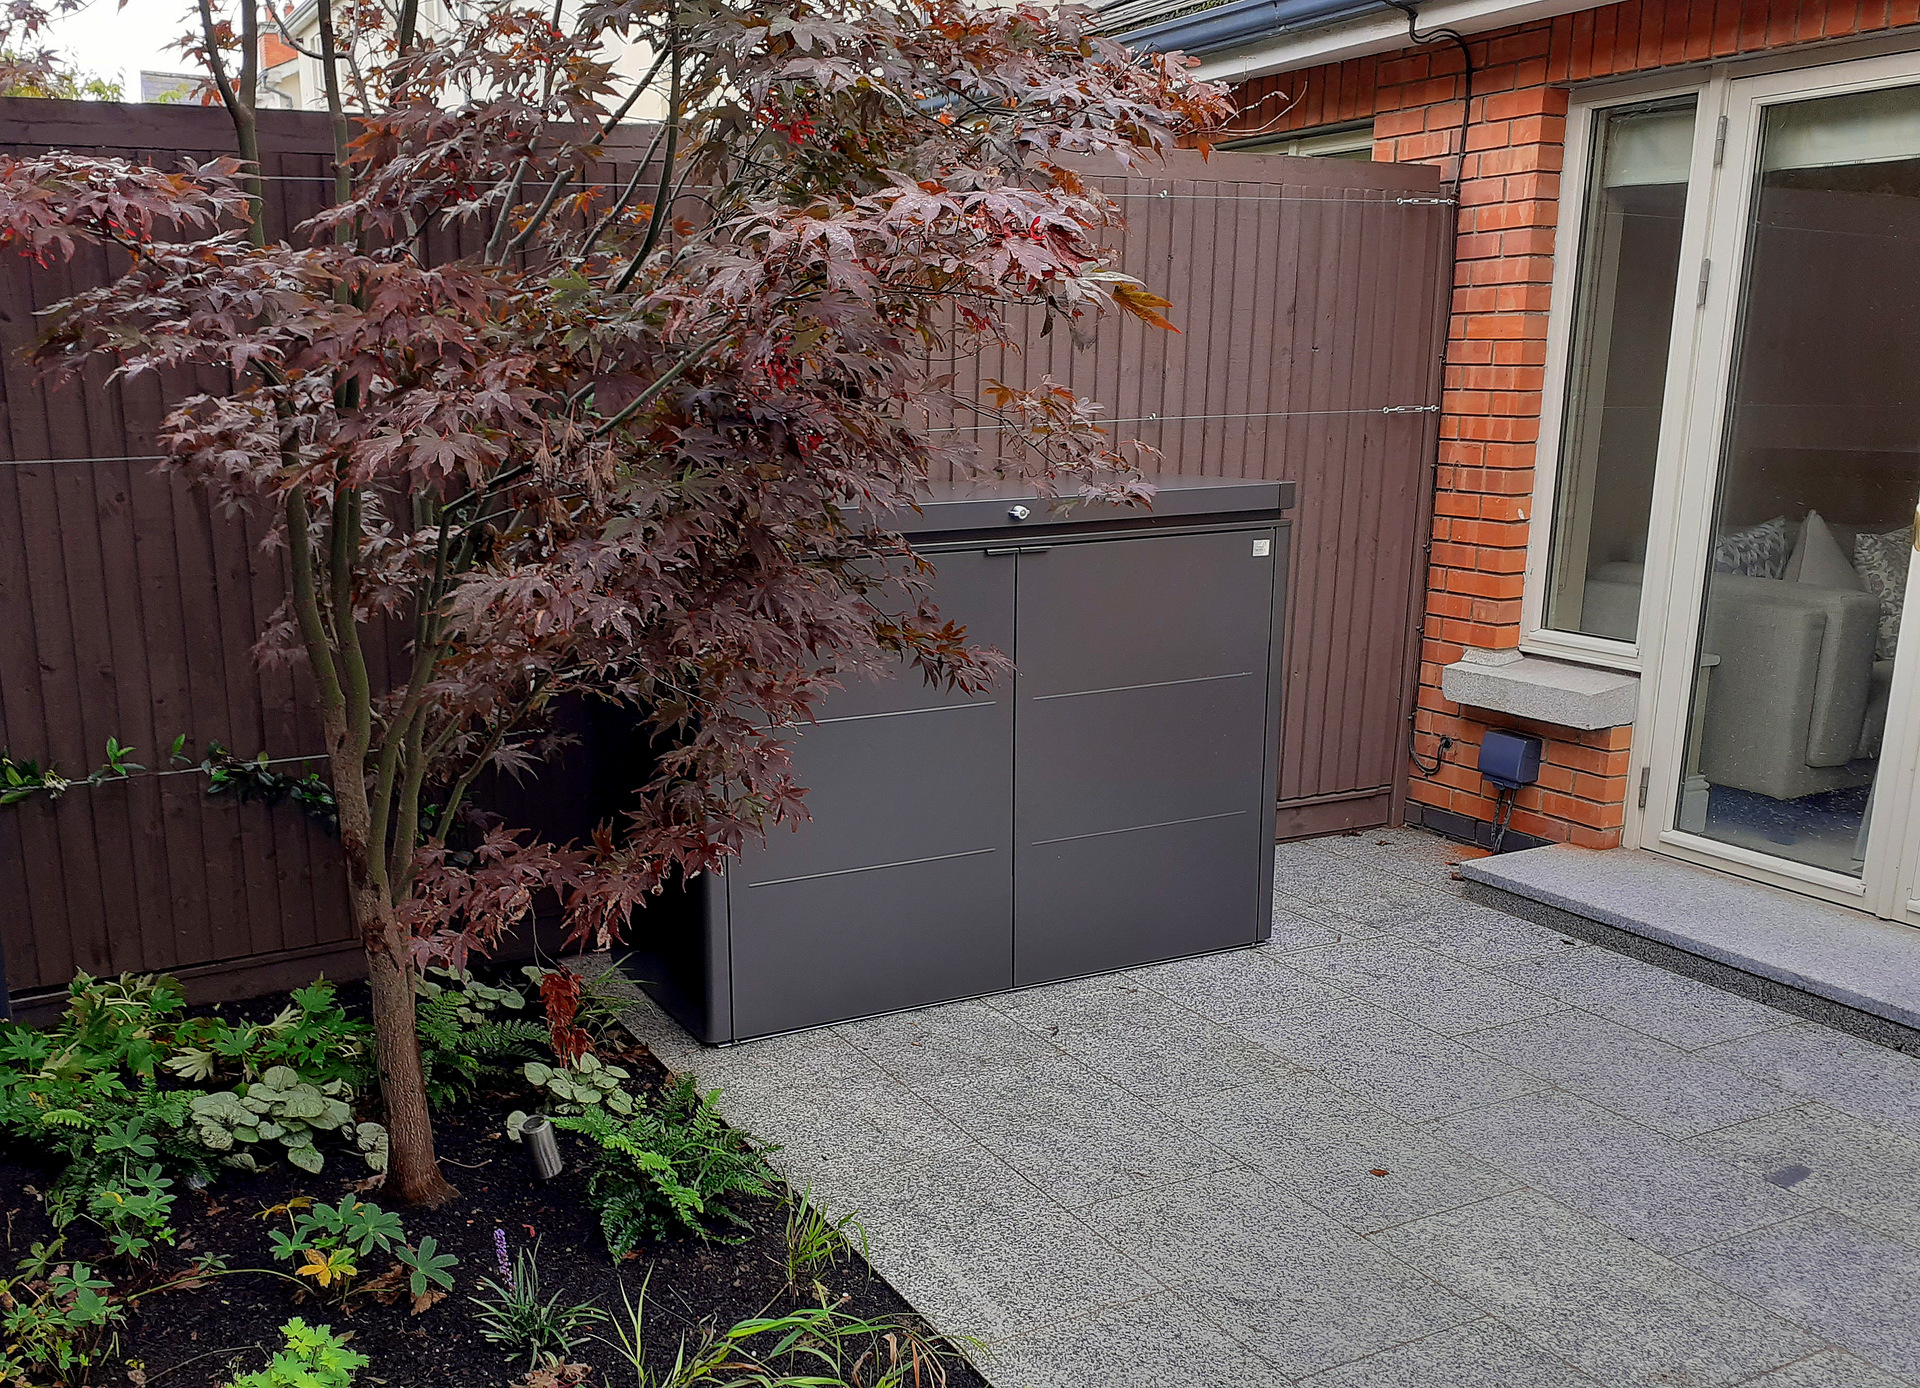 Biohort HighBoard 160 Storage Unit in metallic dark grey with optional intermediate shelving, supplied + fitted in Castleknock, Dublin  15 | Owen Chubb Garden Landscapers